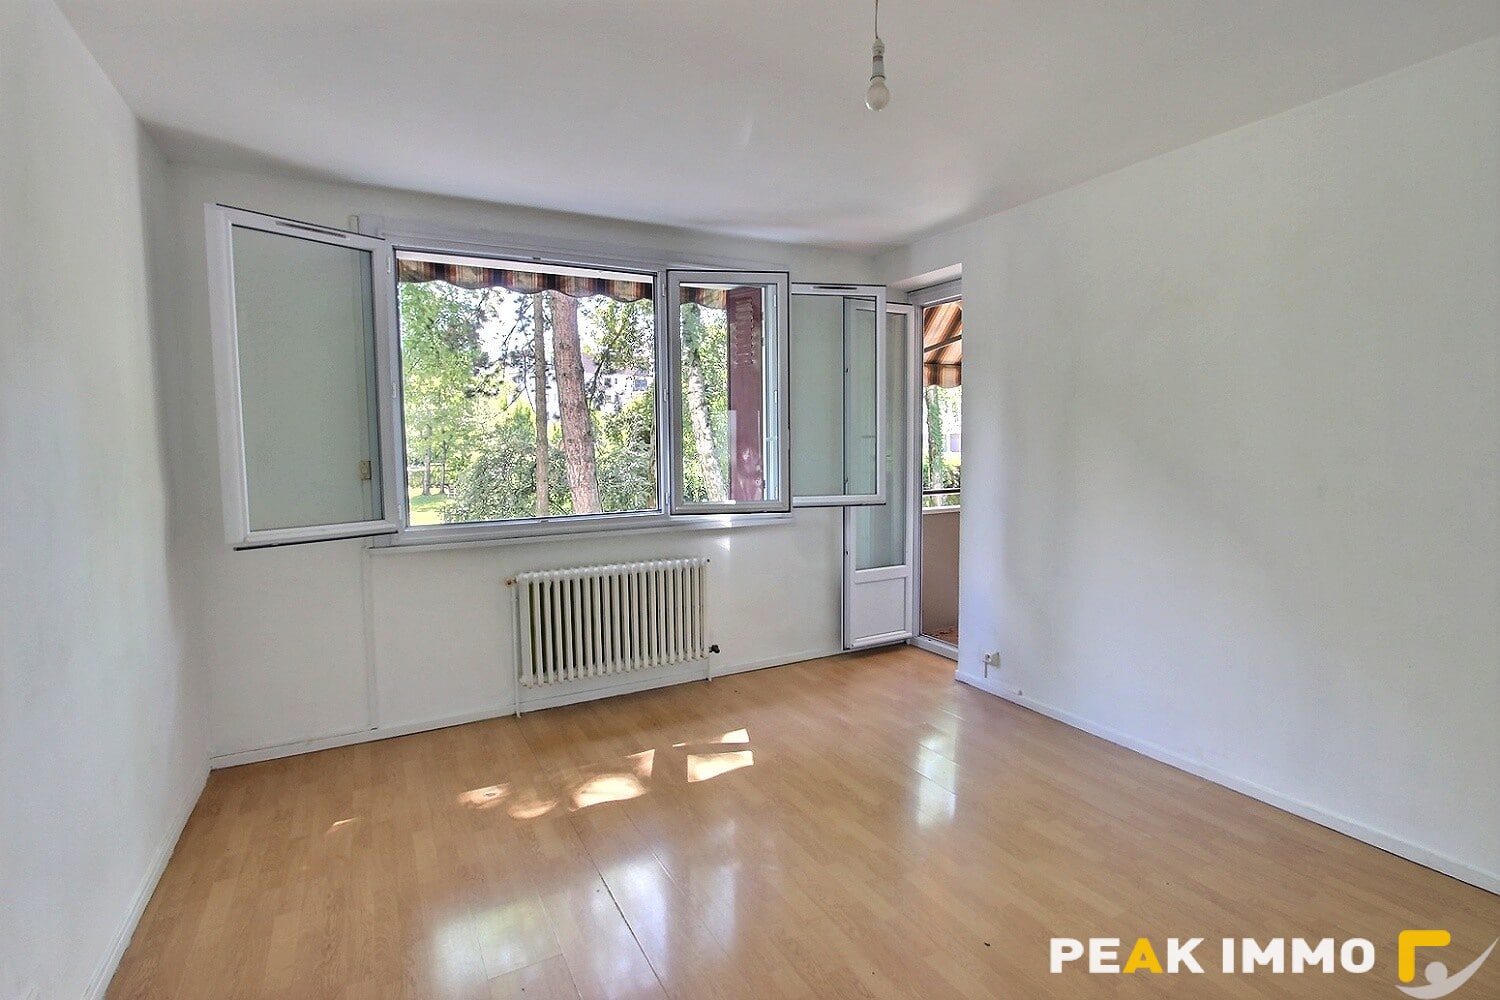 Appartement 3 pièces 54 m2 - Annecy